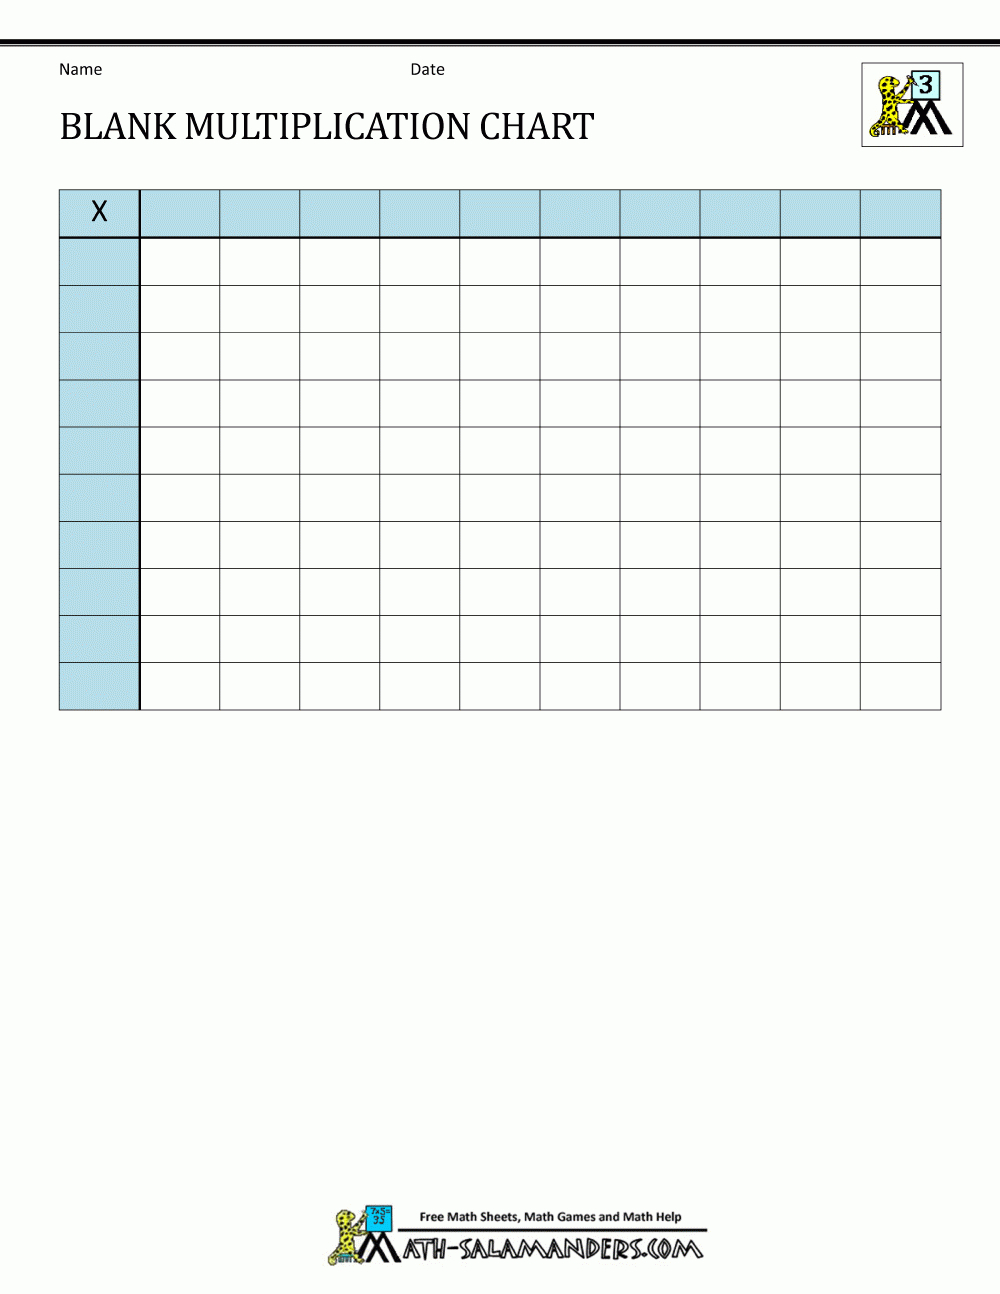 Blank Multiplication Chart Up To 10X10 regarding Printable Blank Multiplication Table